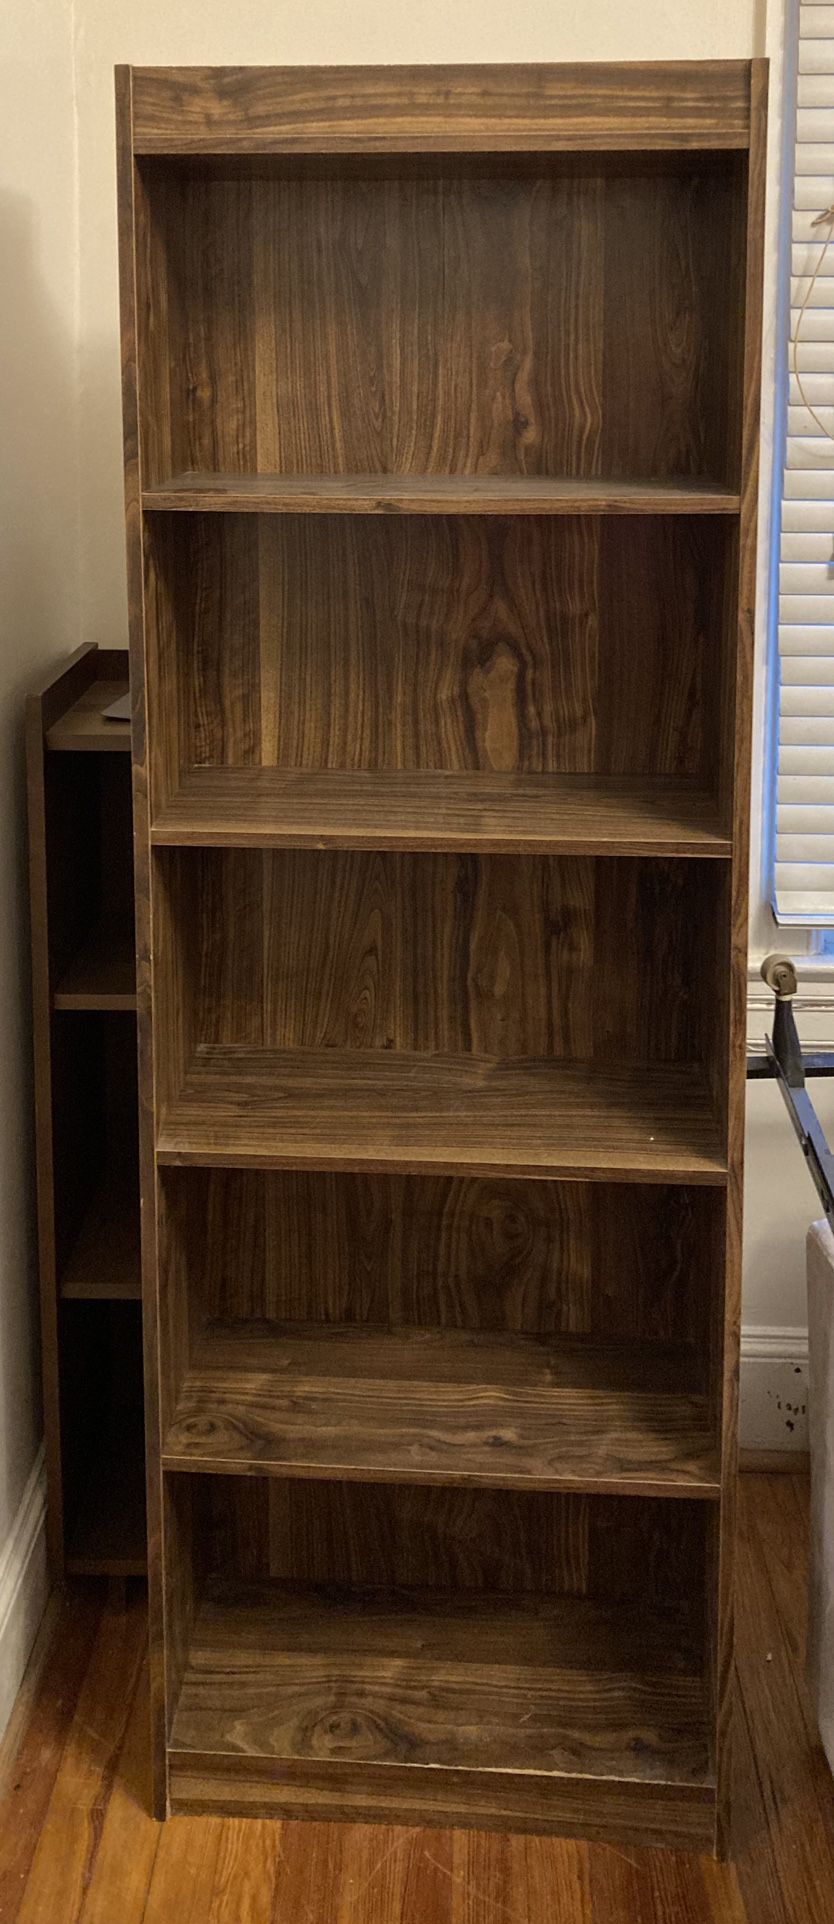 Bookcase - 5 Shelves